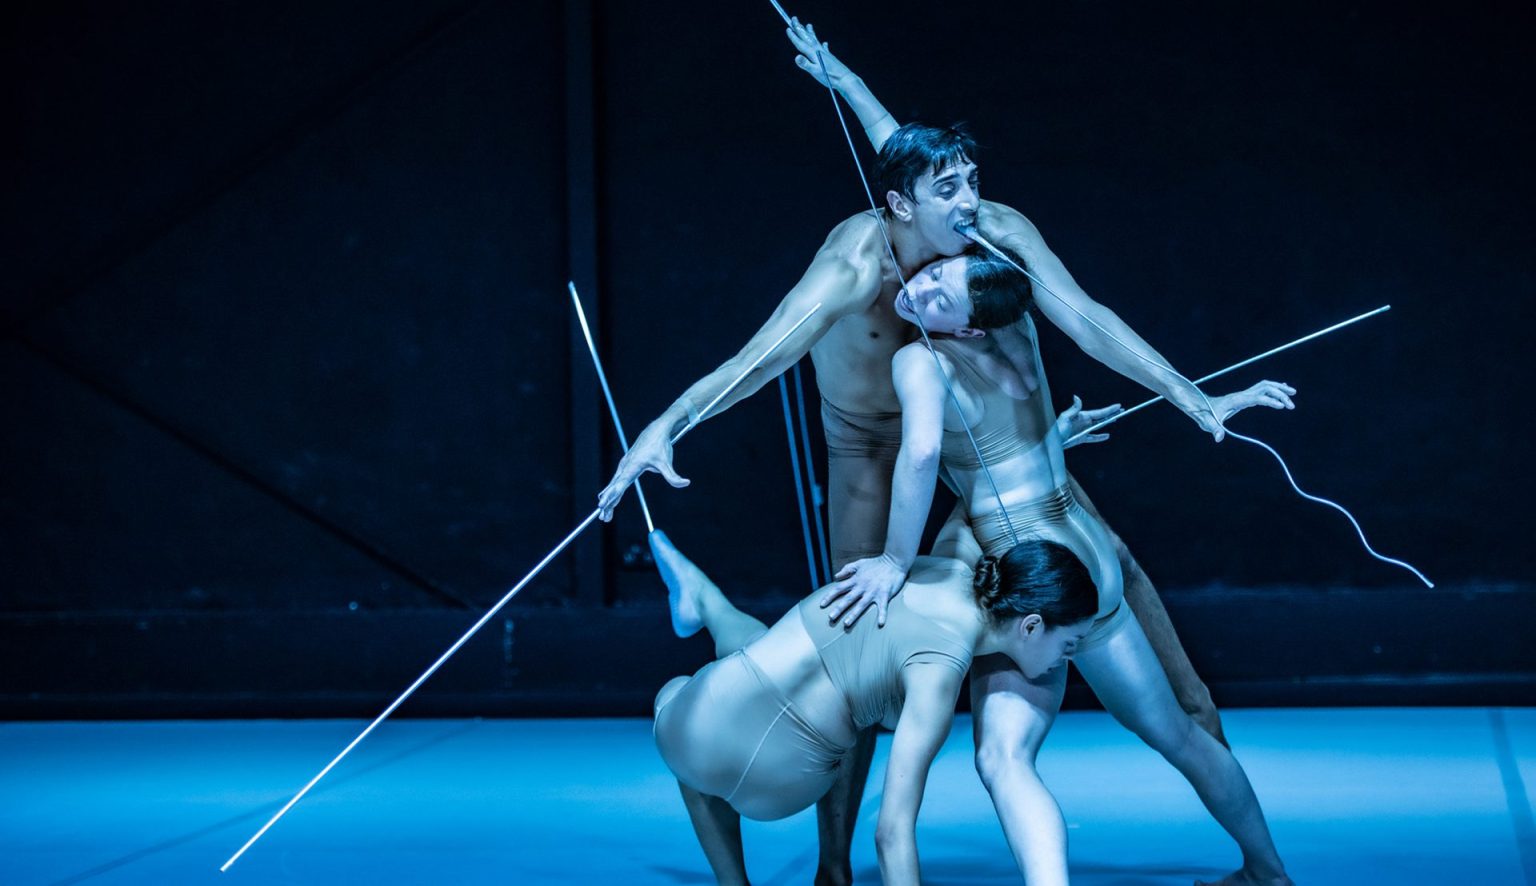 The performance “Techno Fauna” - part of Move Your Mind Festival 2022 at the dance theater Bora Bora